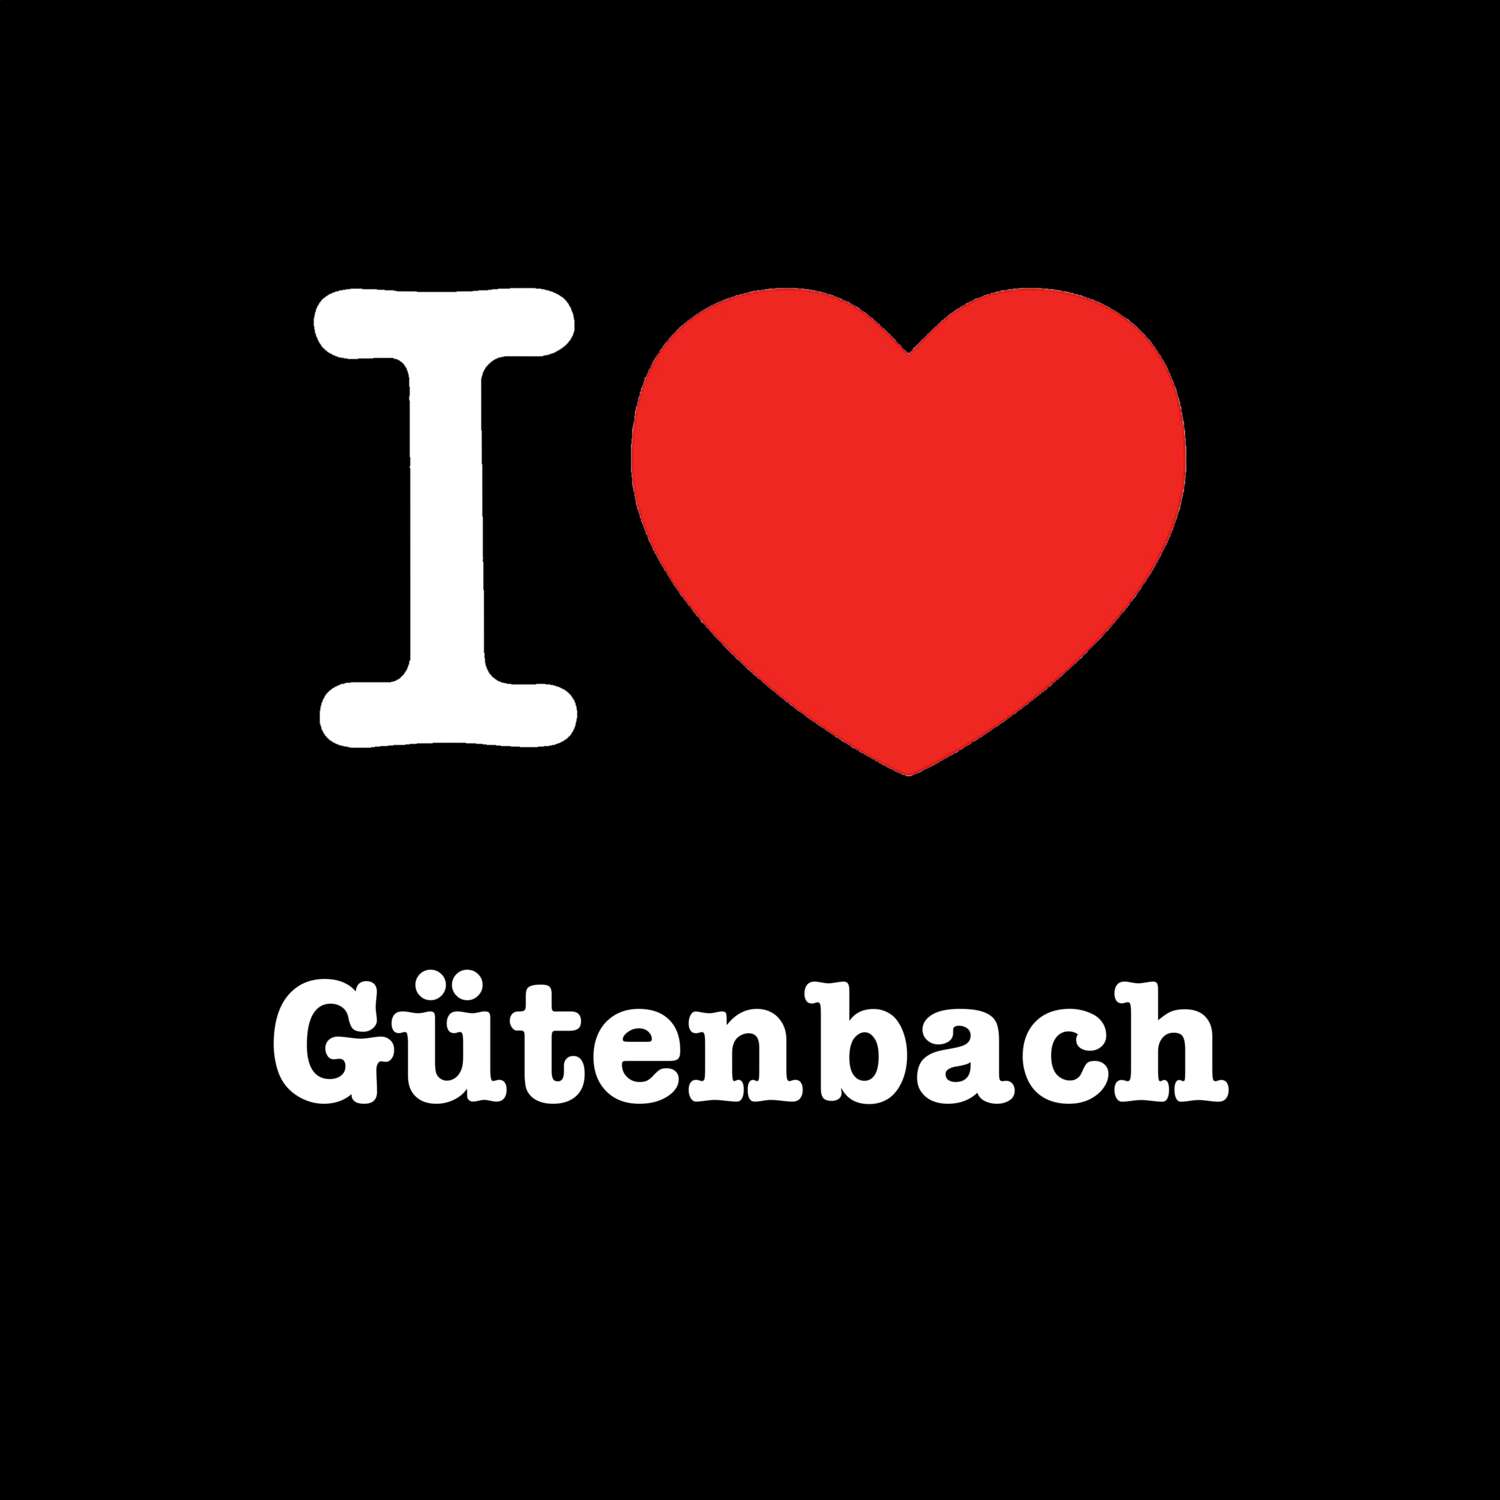 Gütenbach T-Shirt »I love«